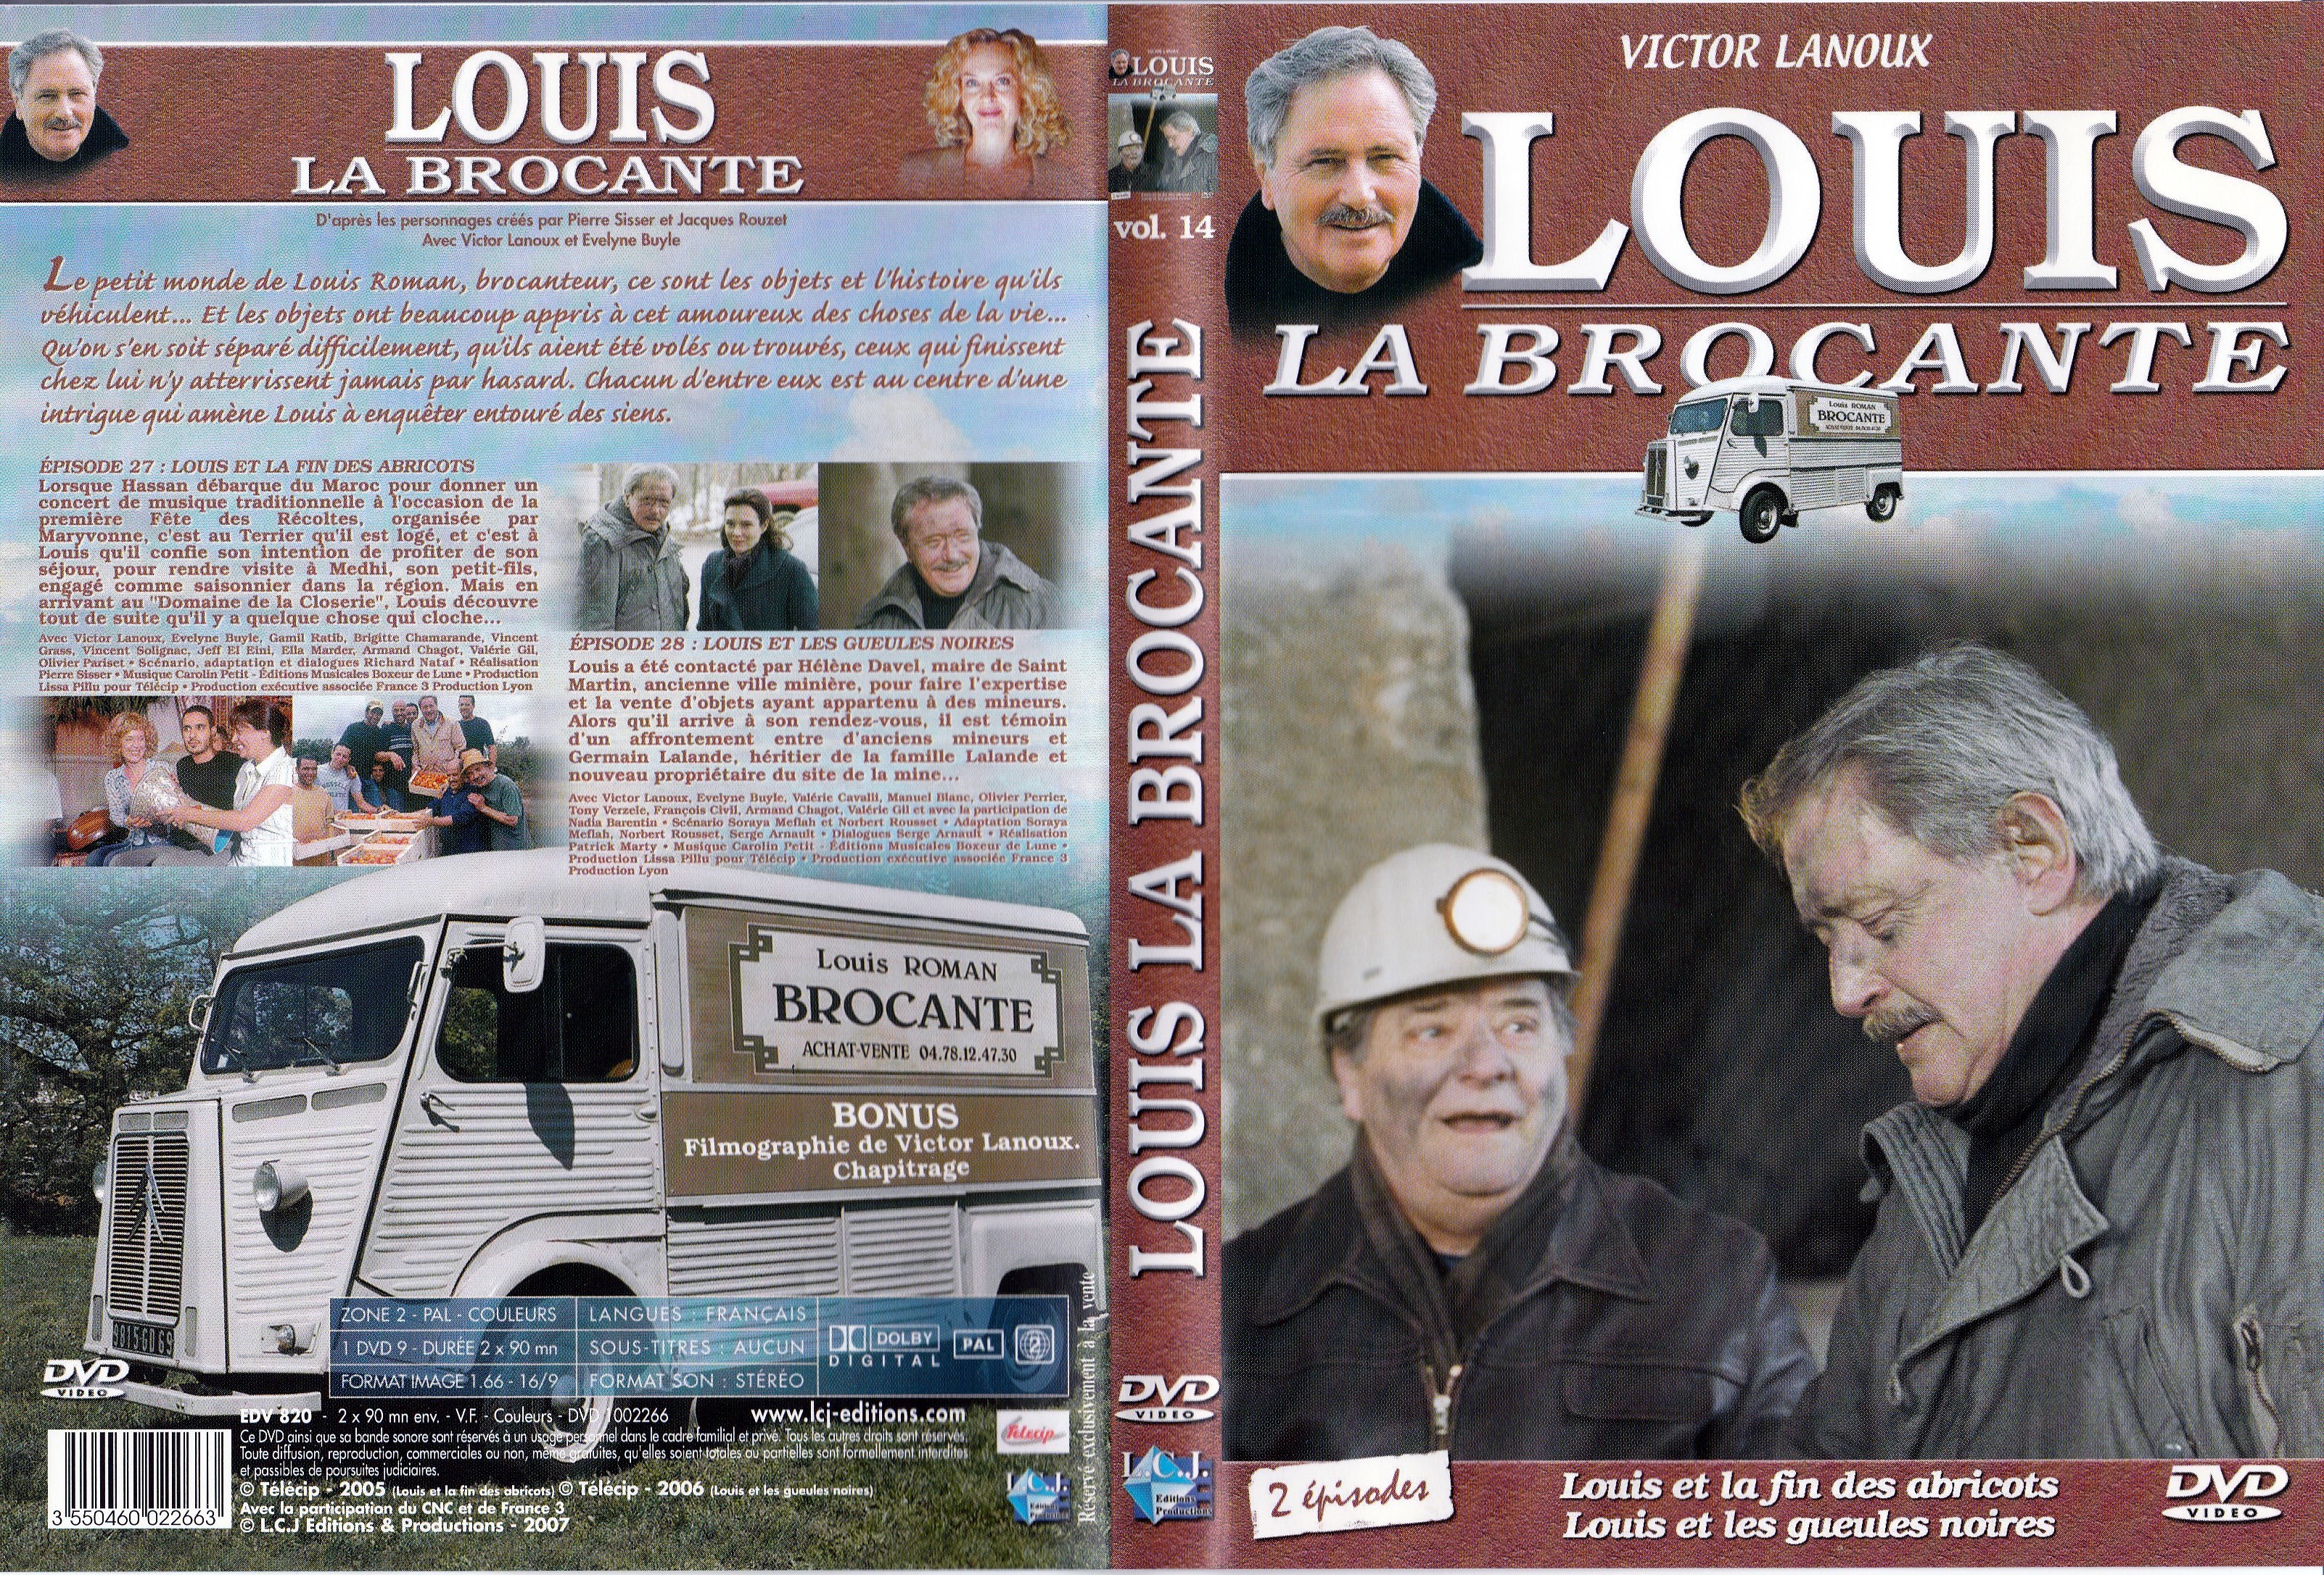 Jaquette DVD Louis la brocante vol 14